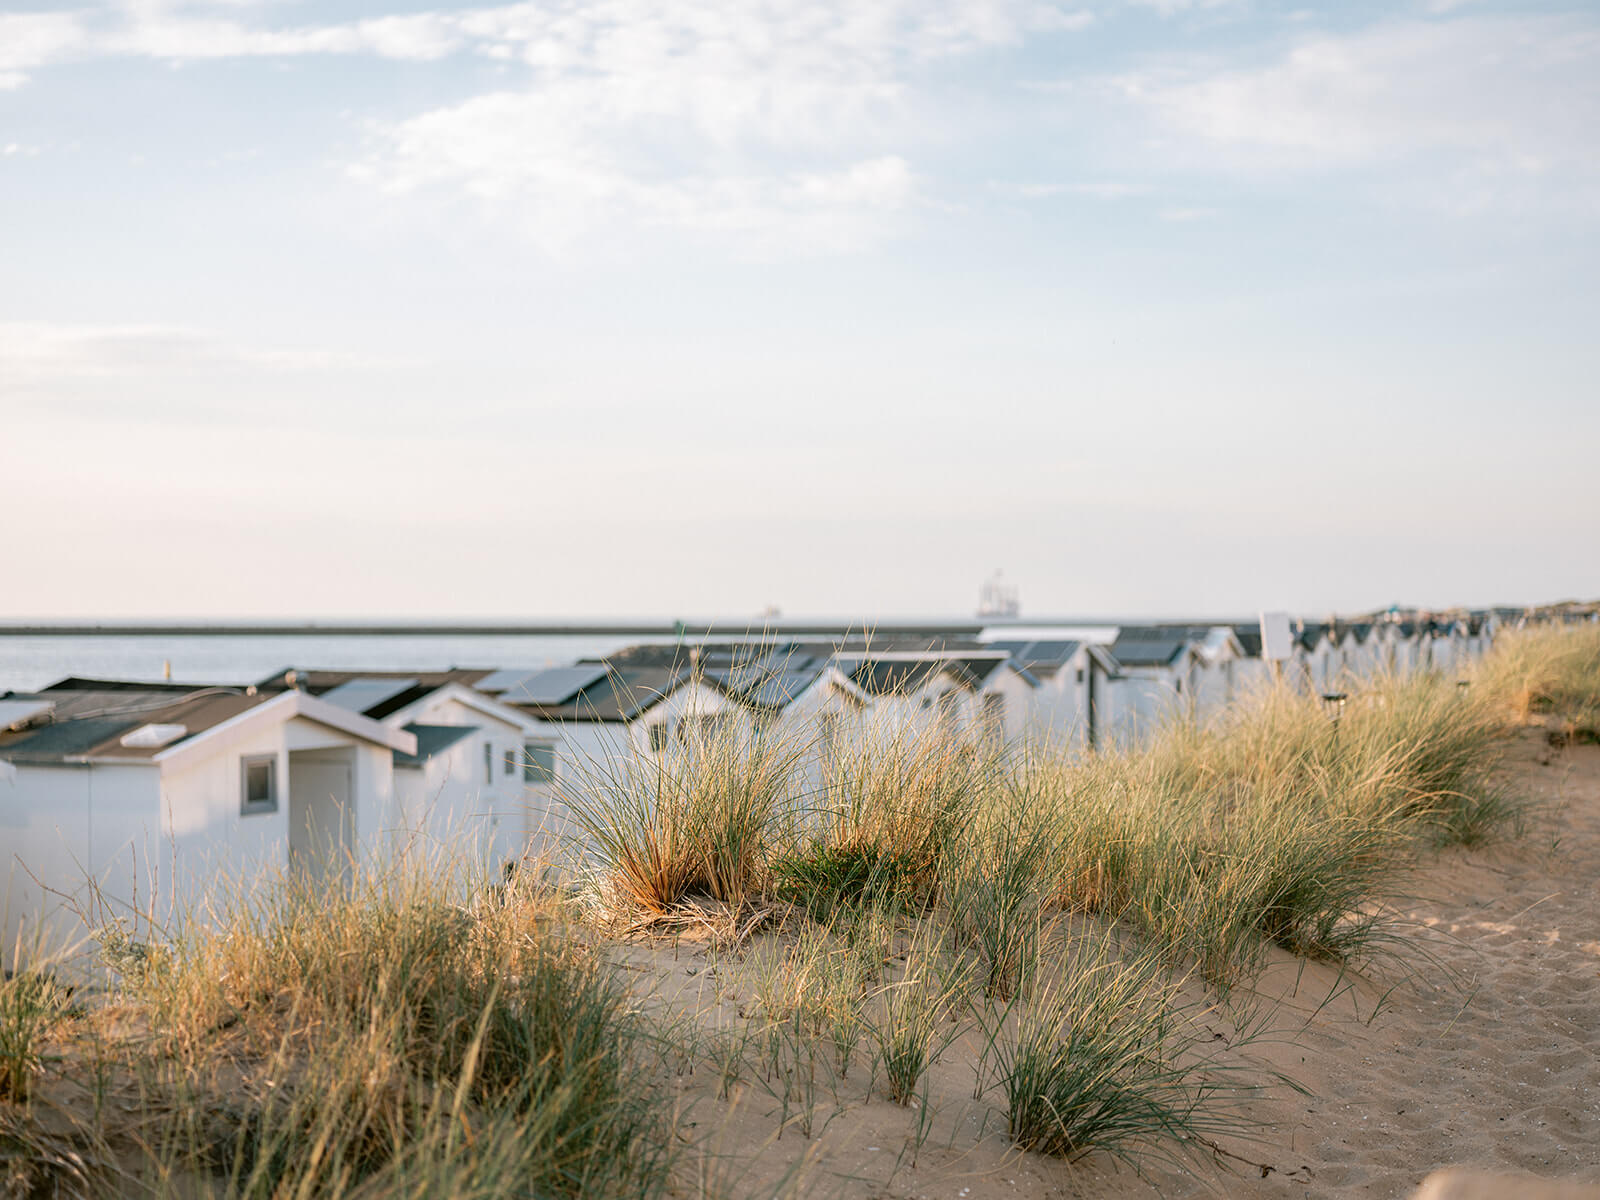 Lifestyle portrait photography on the beach in the Netherlands | Raisa Zwart Photography